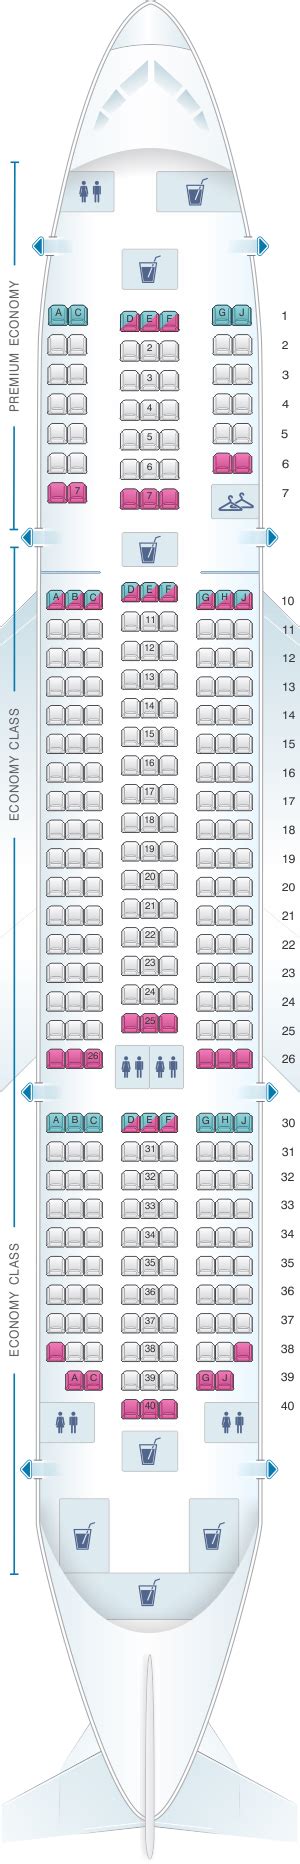 Seat Plan Tui Dreamliner 787 9 Elcho Table